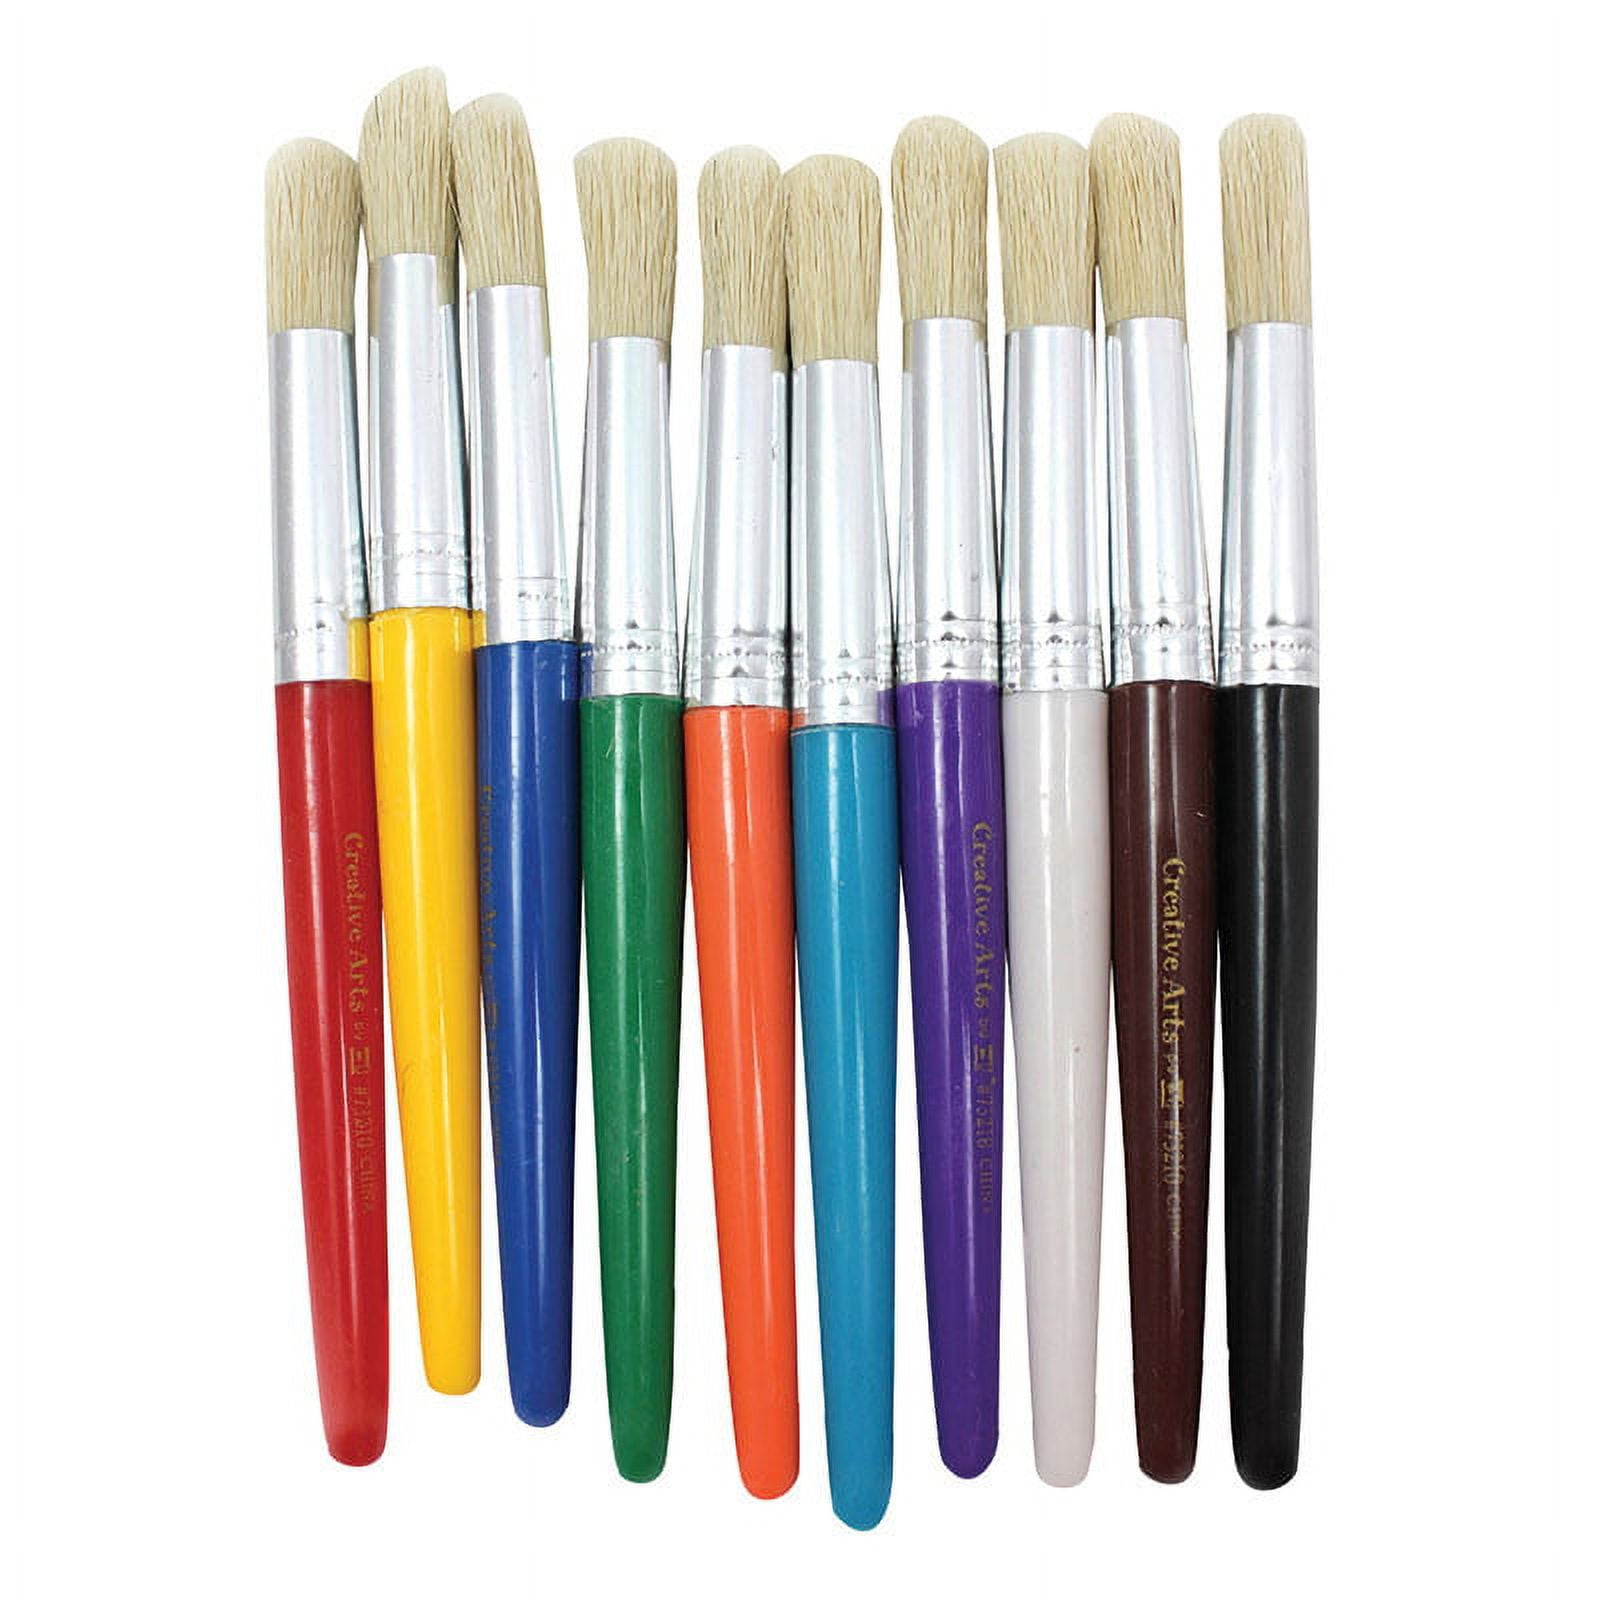 MEEDEN 10 Pcs Oil Paint Brush Set, Professional Artist Paint Brushes, Hog  Bristle Paint Brushes with Long Handle, Painting Brush Kits w/Carry Case  for